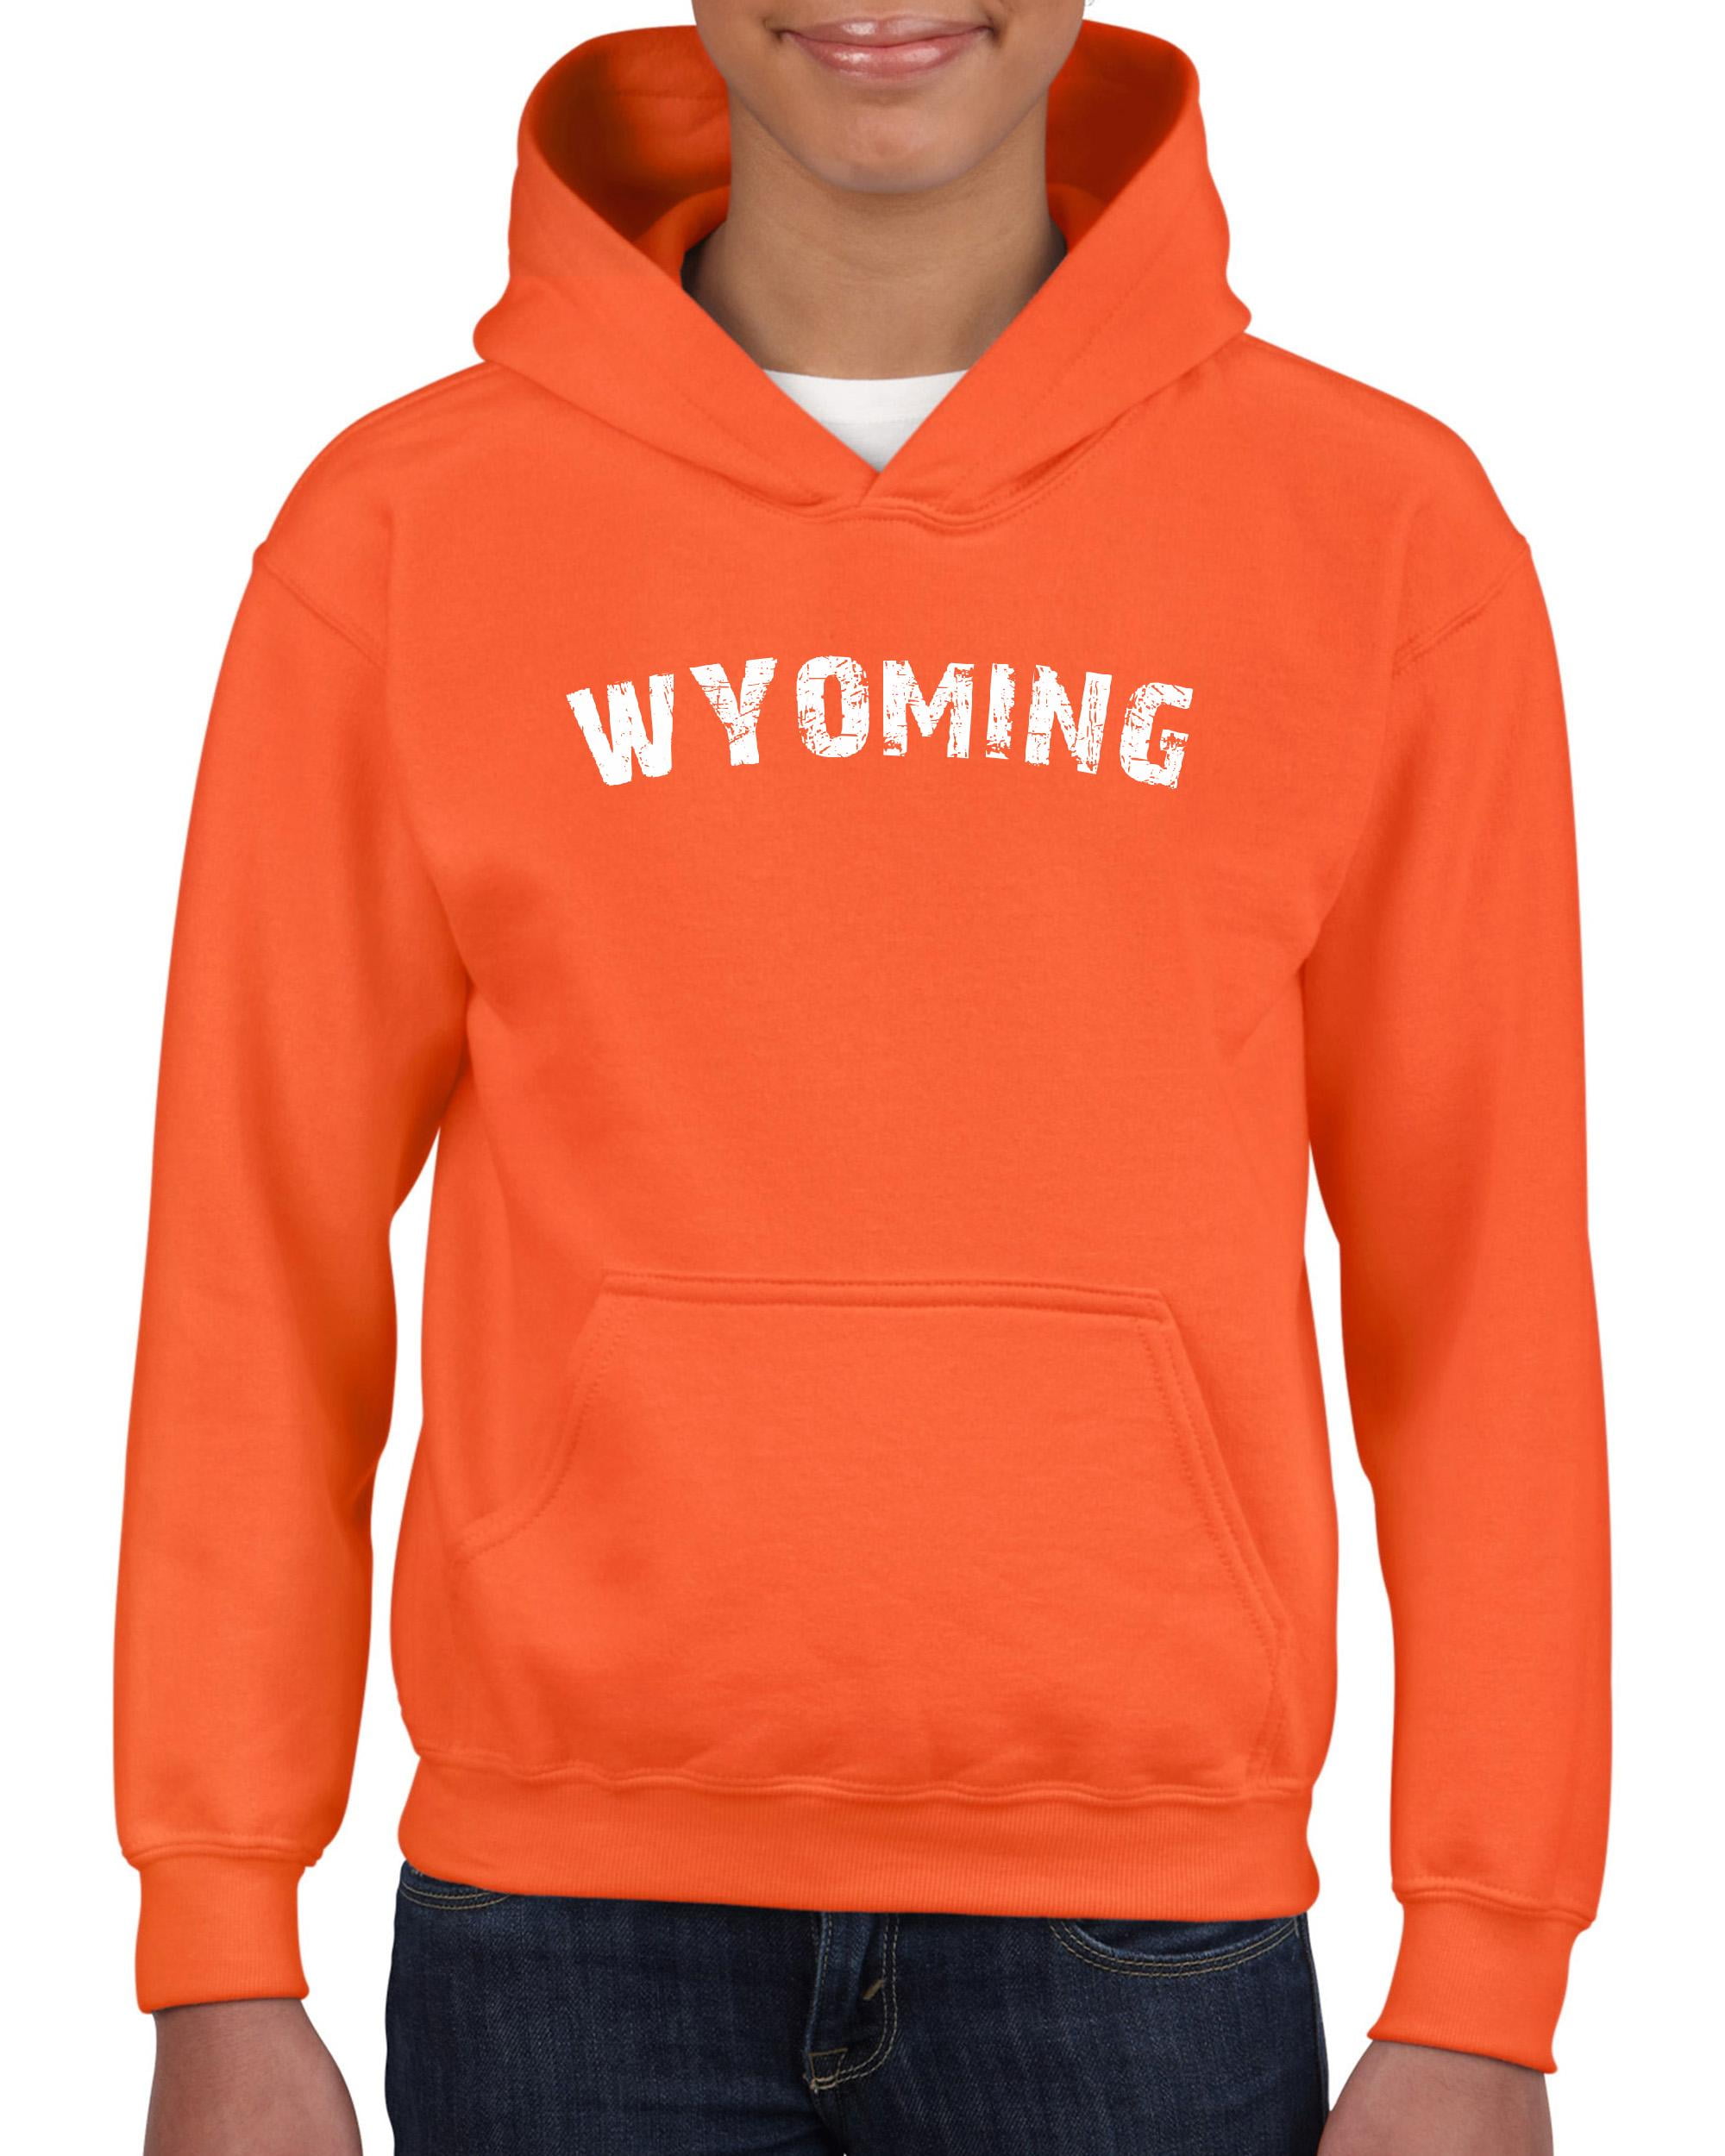 Artix - Big Girls Hoodies and Sweatshirts - Wyoming - Walmart.com